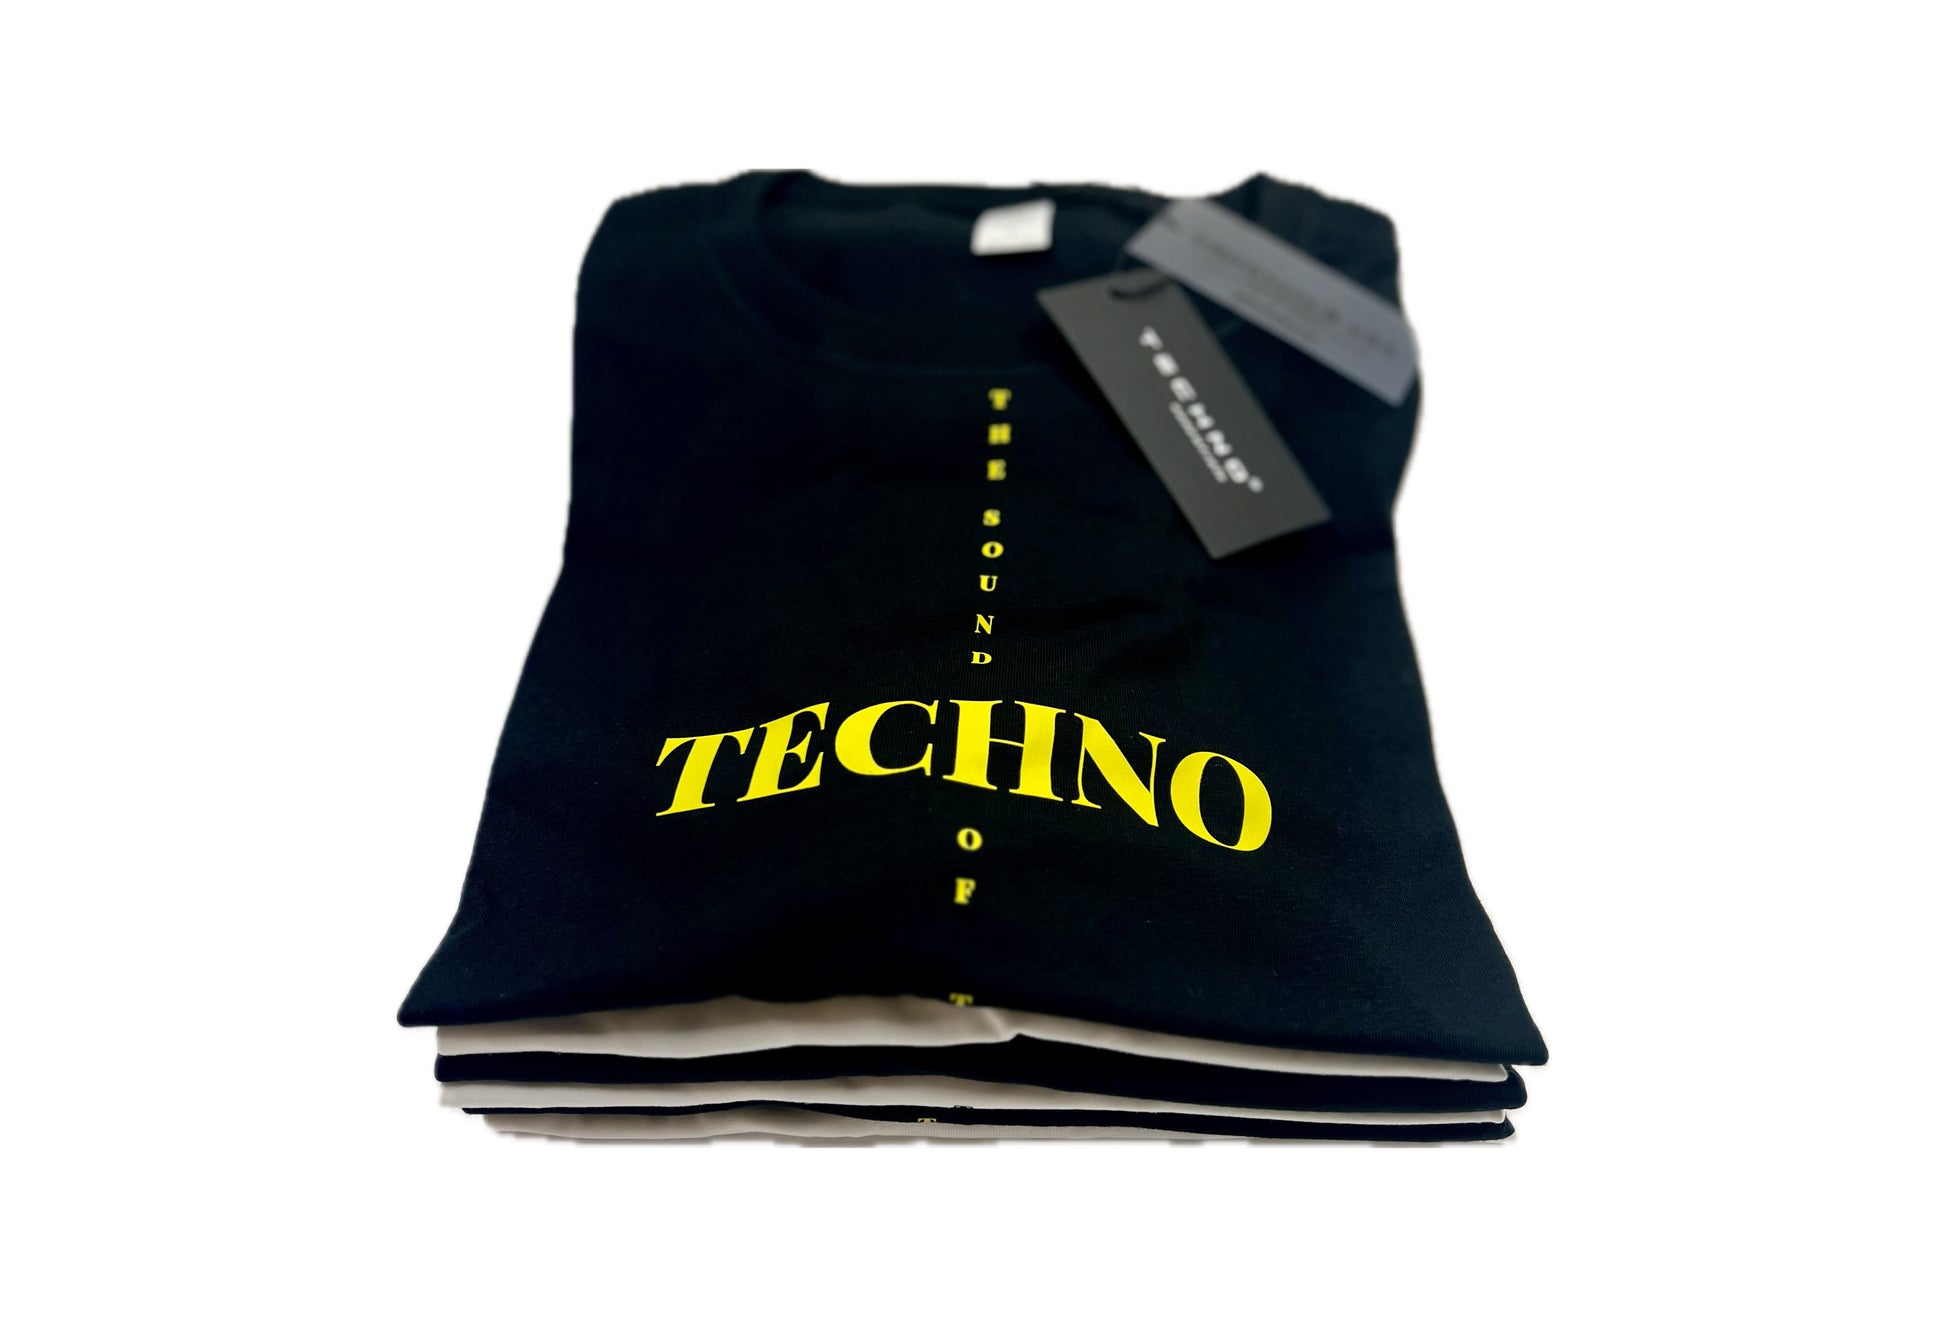 TECHNO essentials 100% Organic Cotton Premium Quality T-Shirt